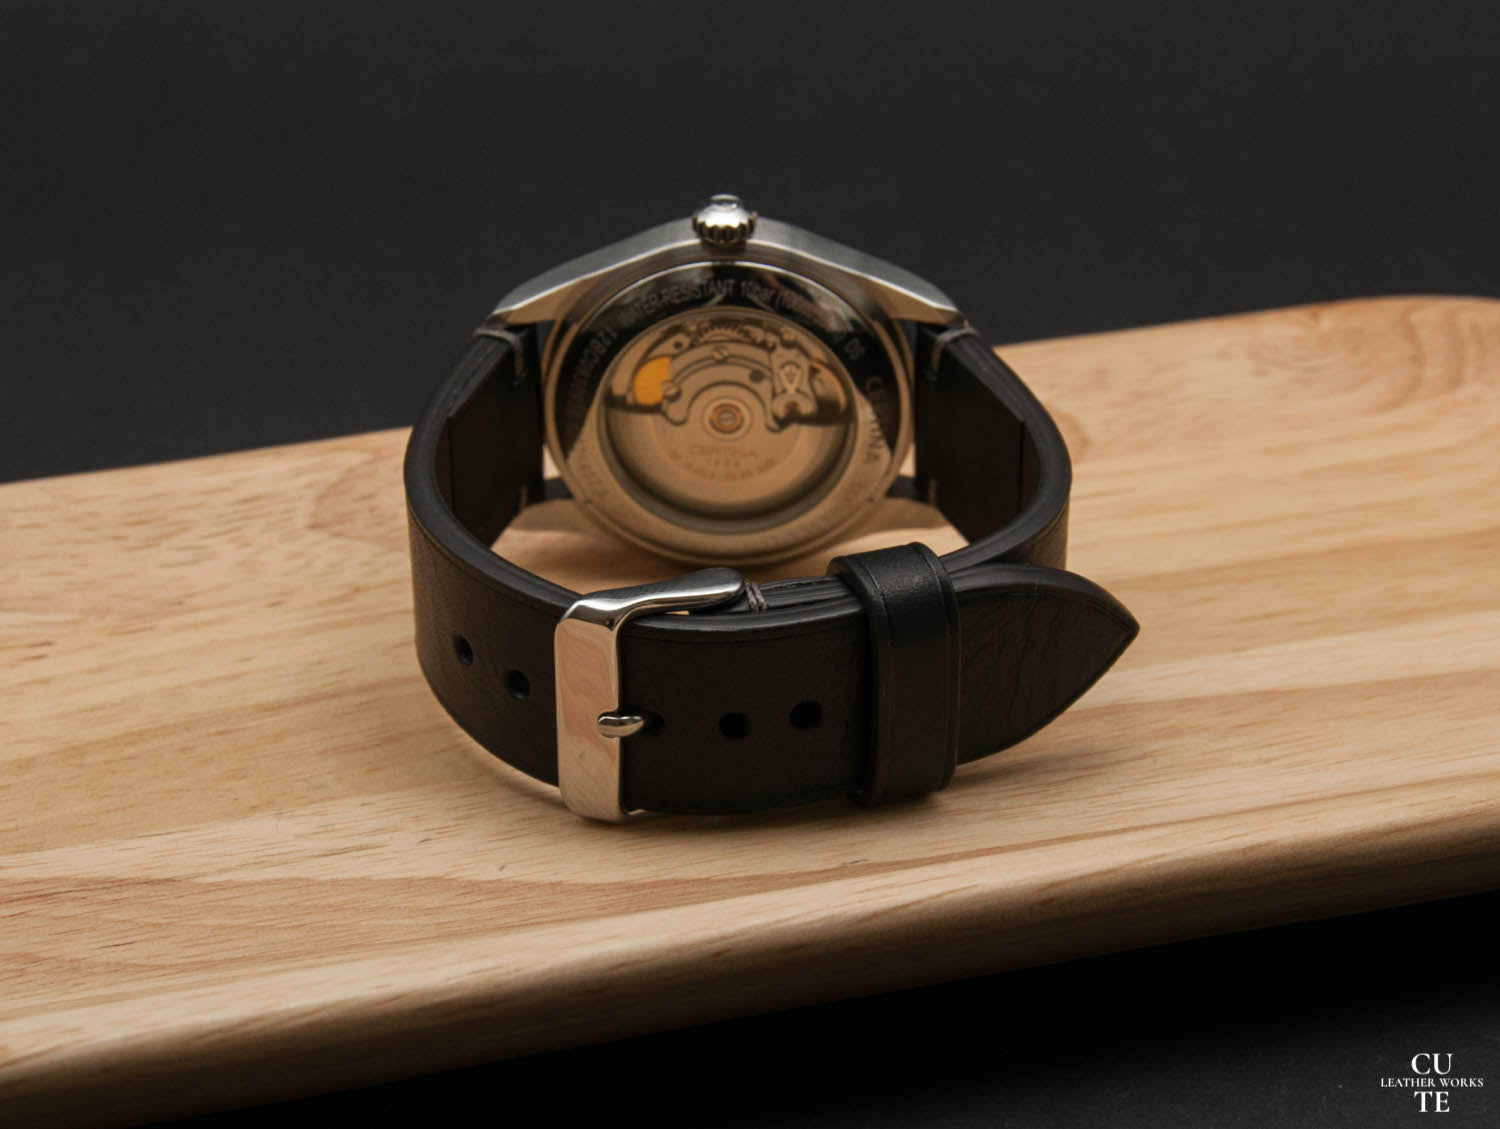 Badalassi Carlo Wax Black Leather Watch Strap, With Lining